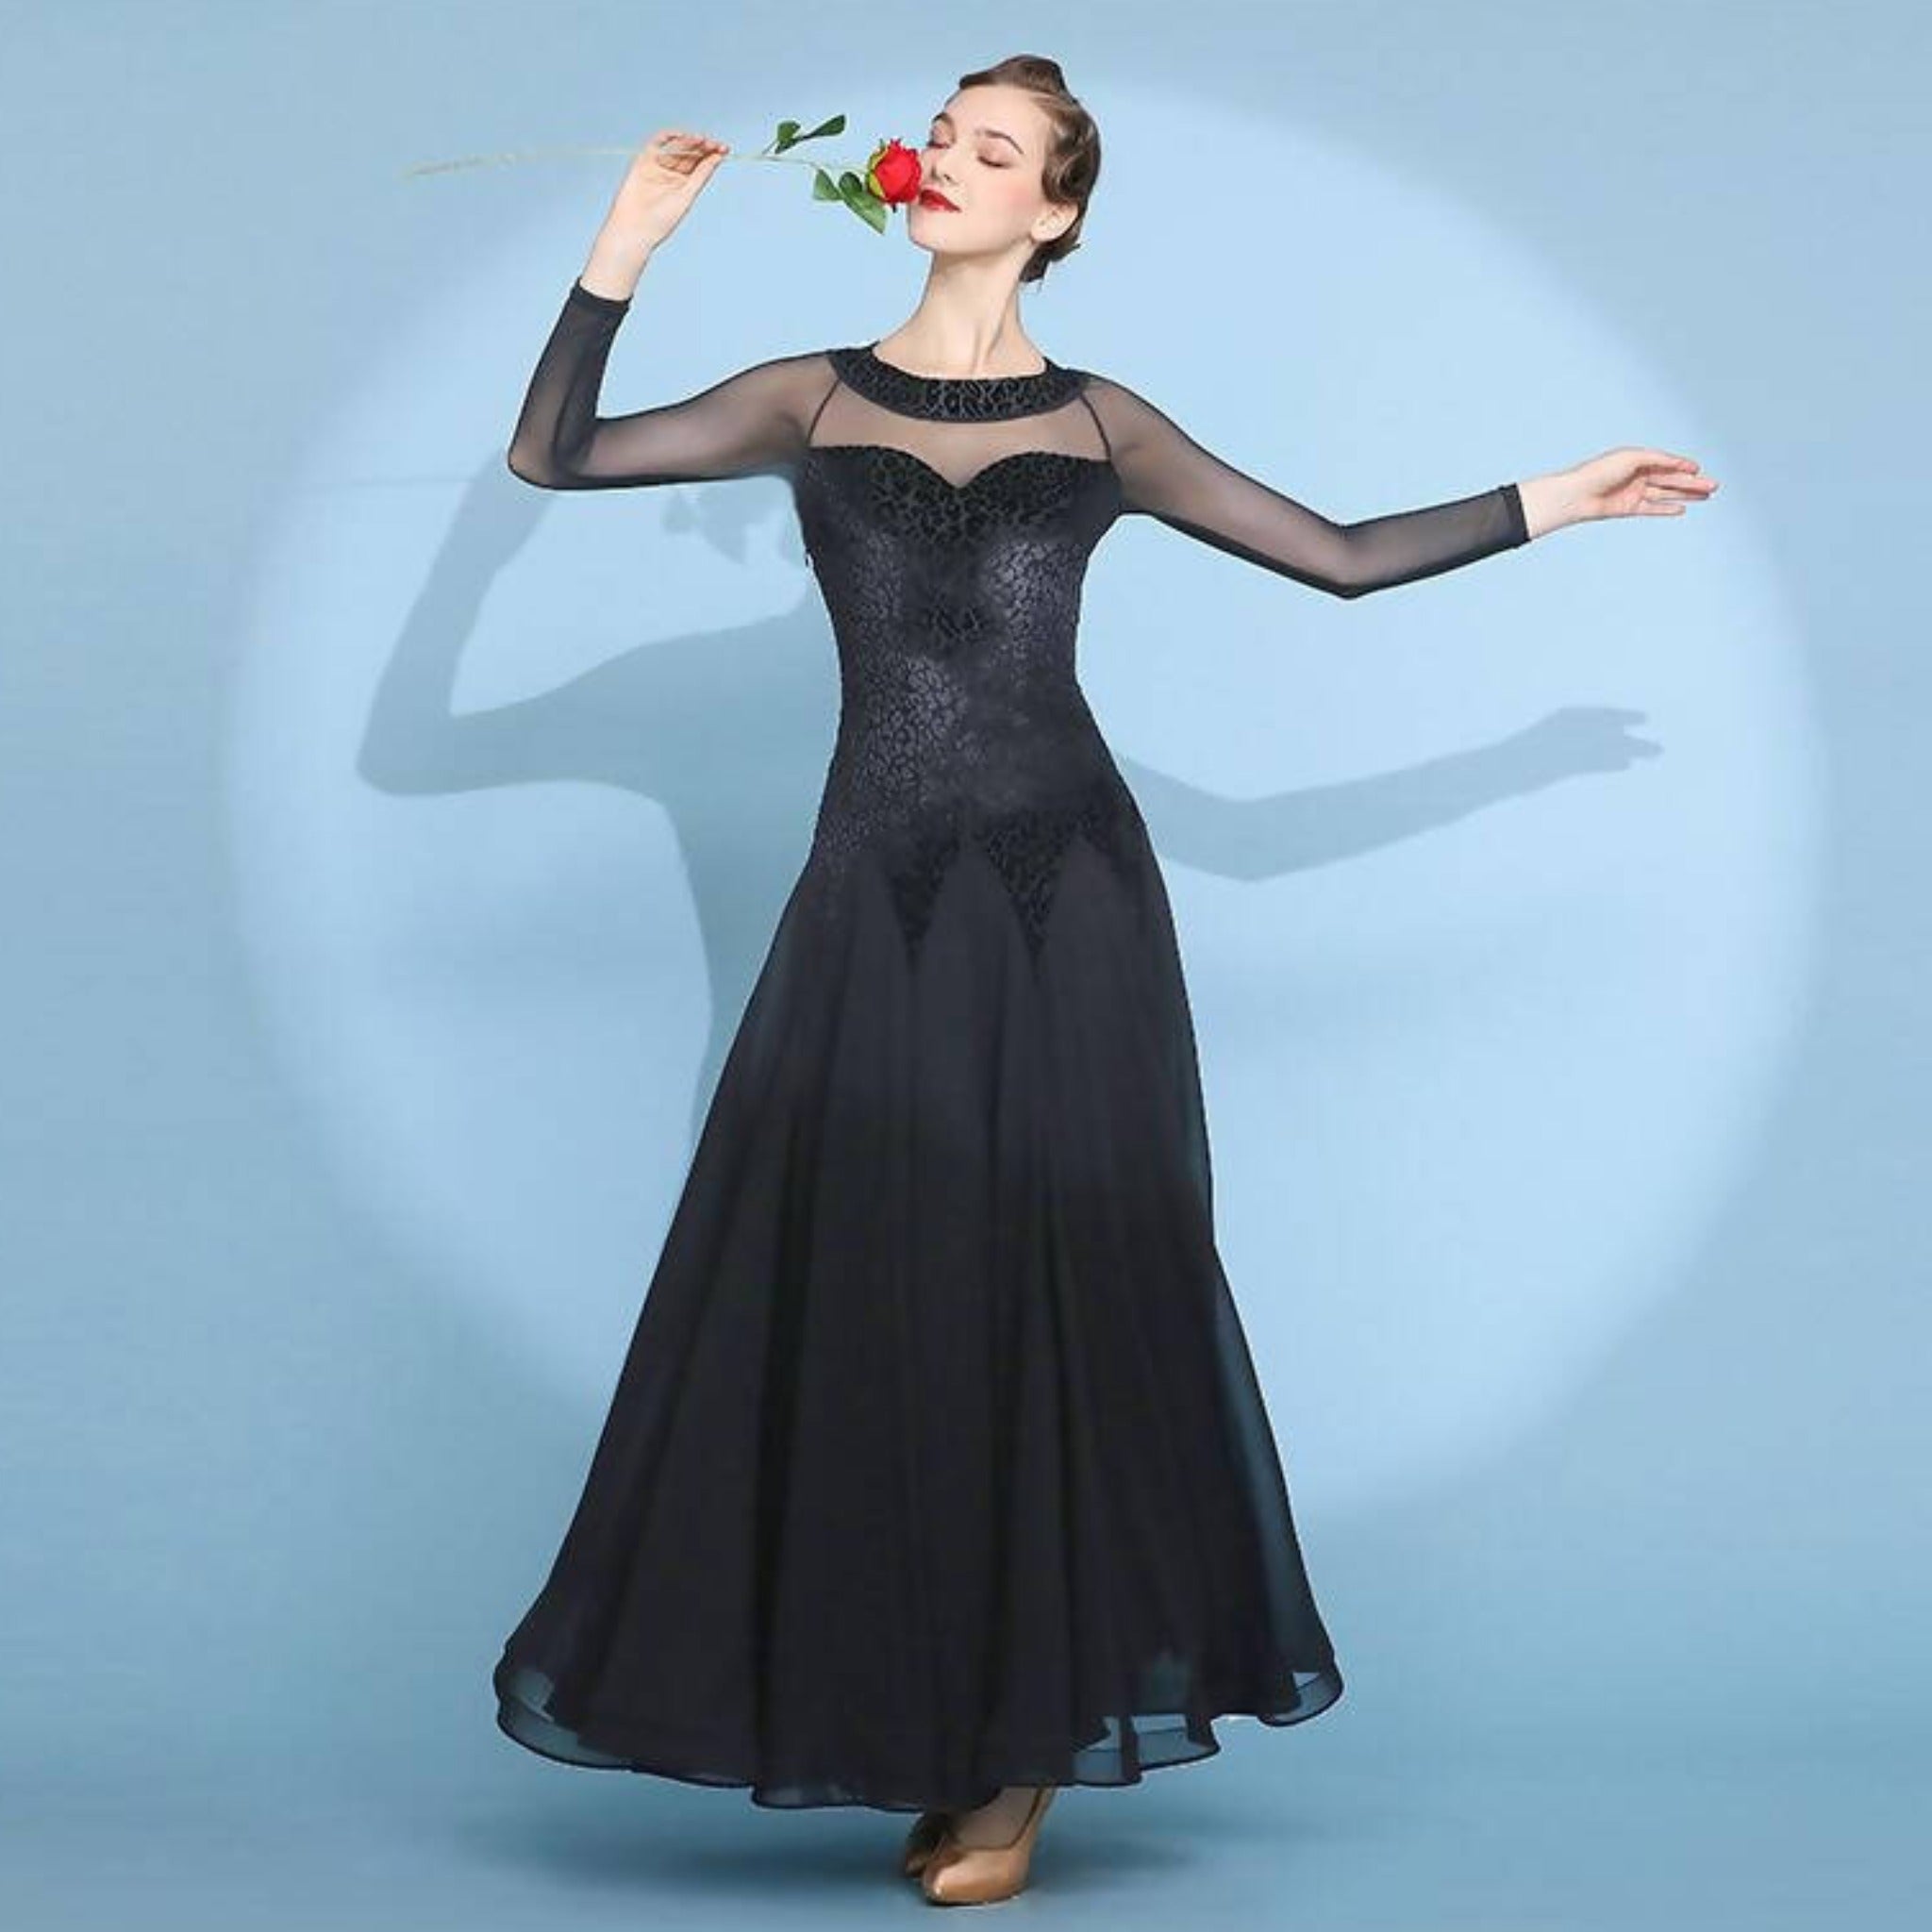 New velvet Black Standard Ballroom Dancewear Dress (dancewear, standard dress) 2117